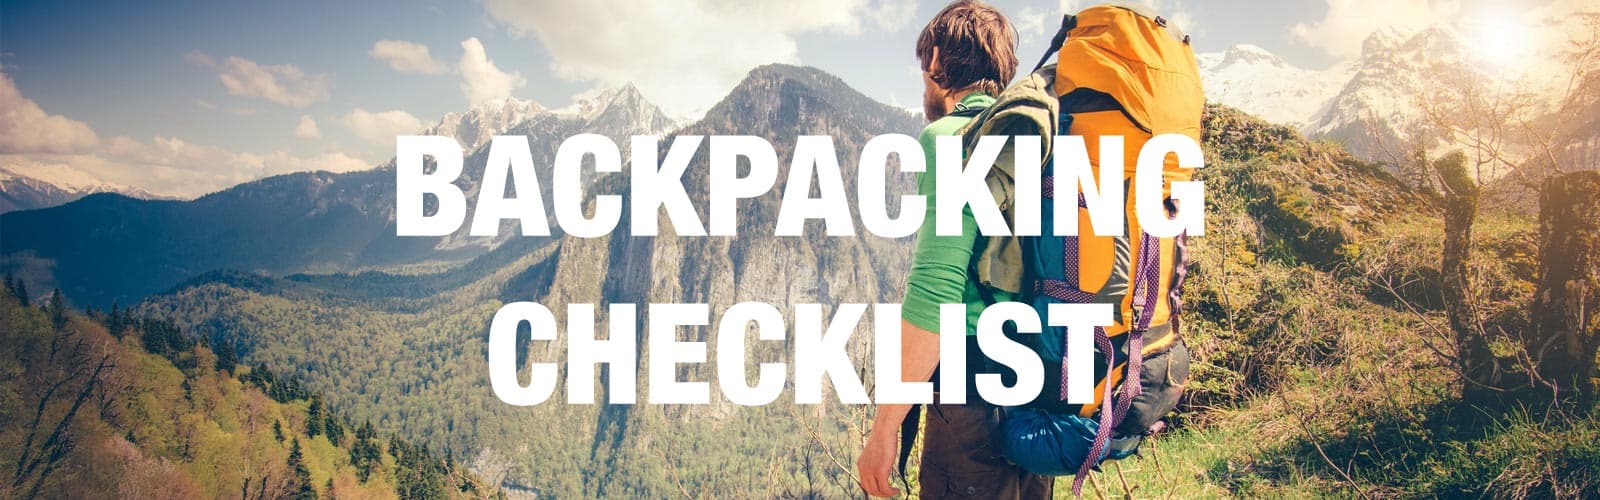 Backpacking Checklist: Sierra